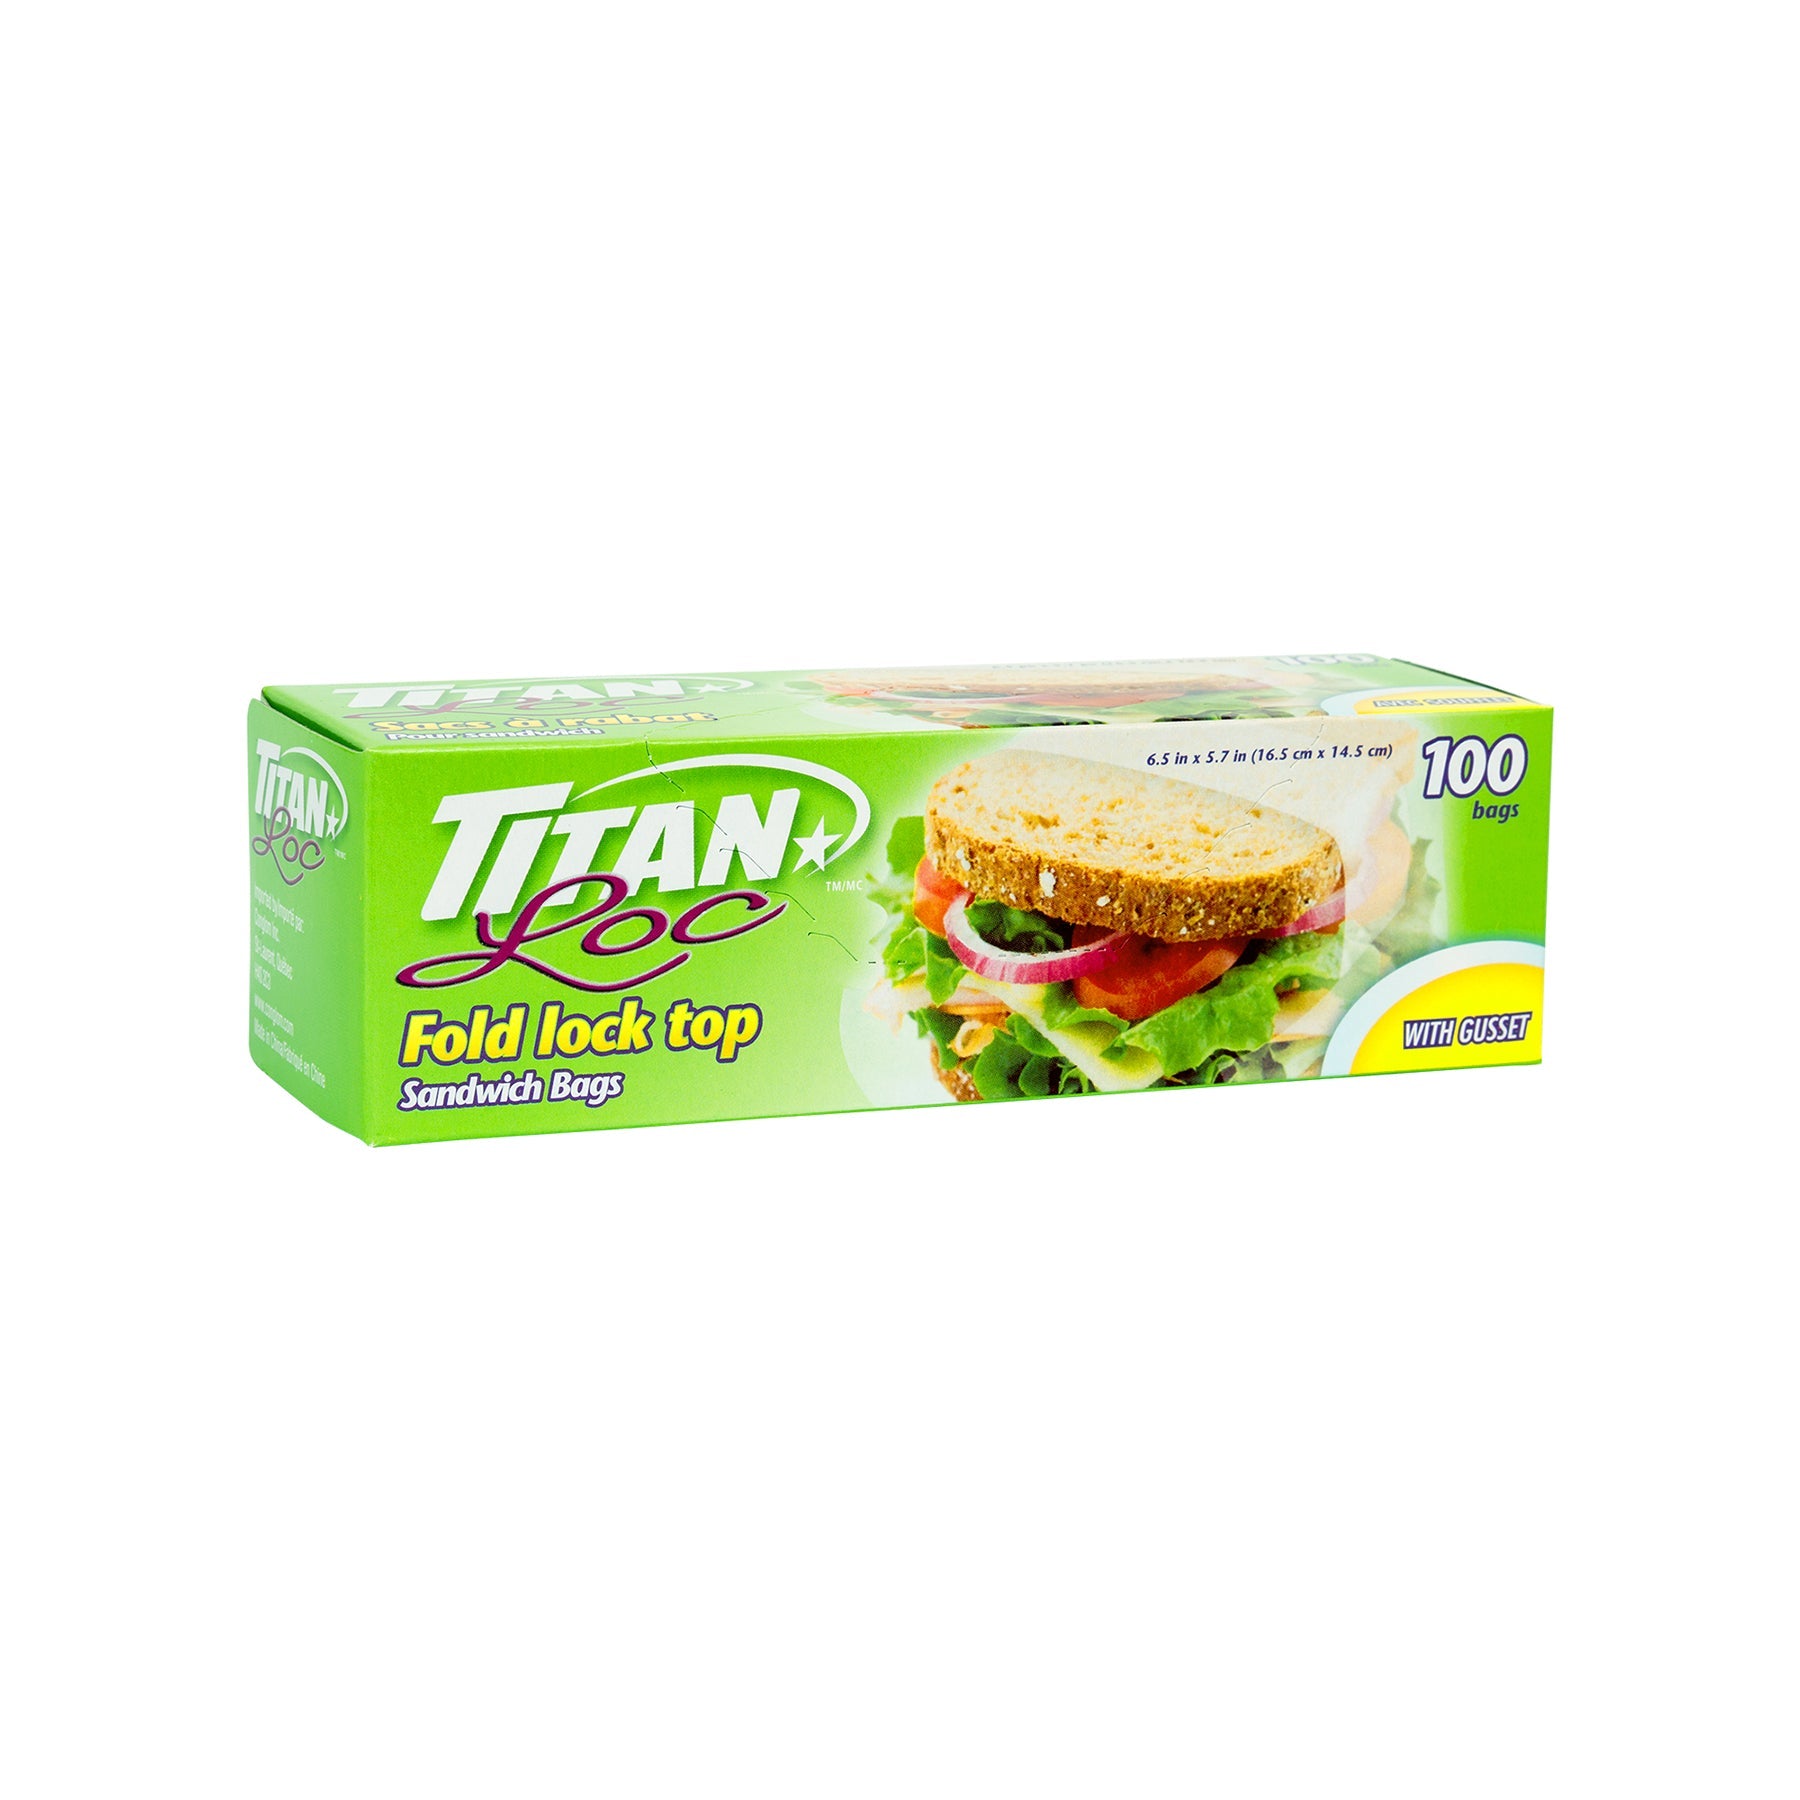 Titan 100 Fold Lock Top Sandwich Bags with Gusset 6.5x5.7in